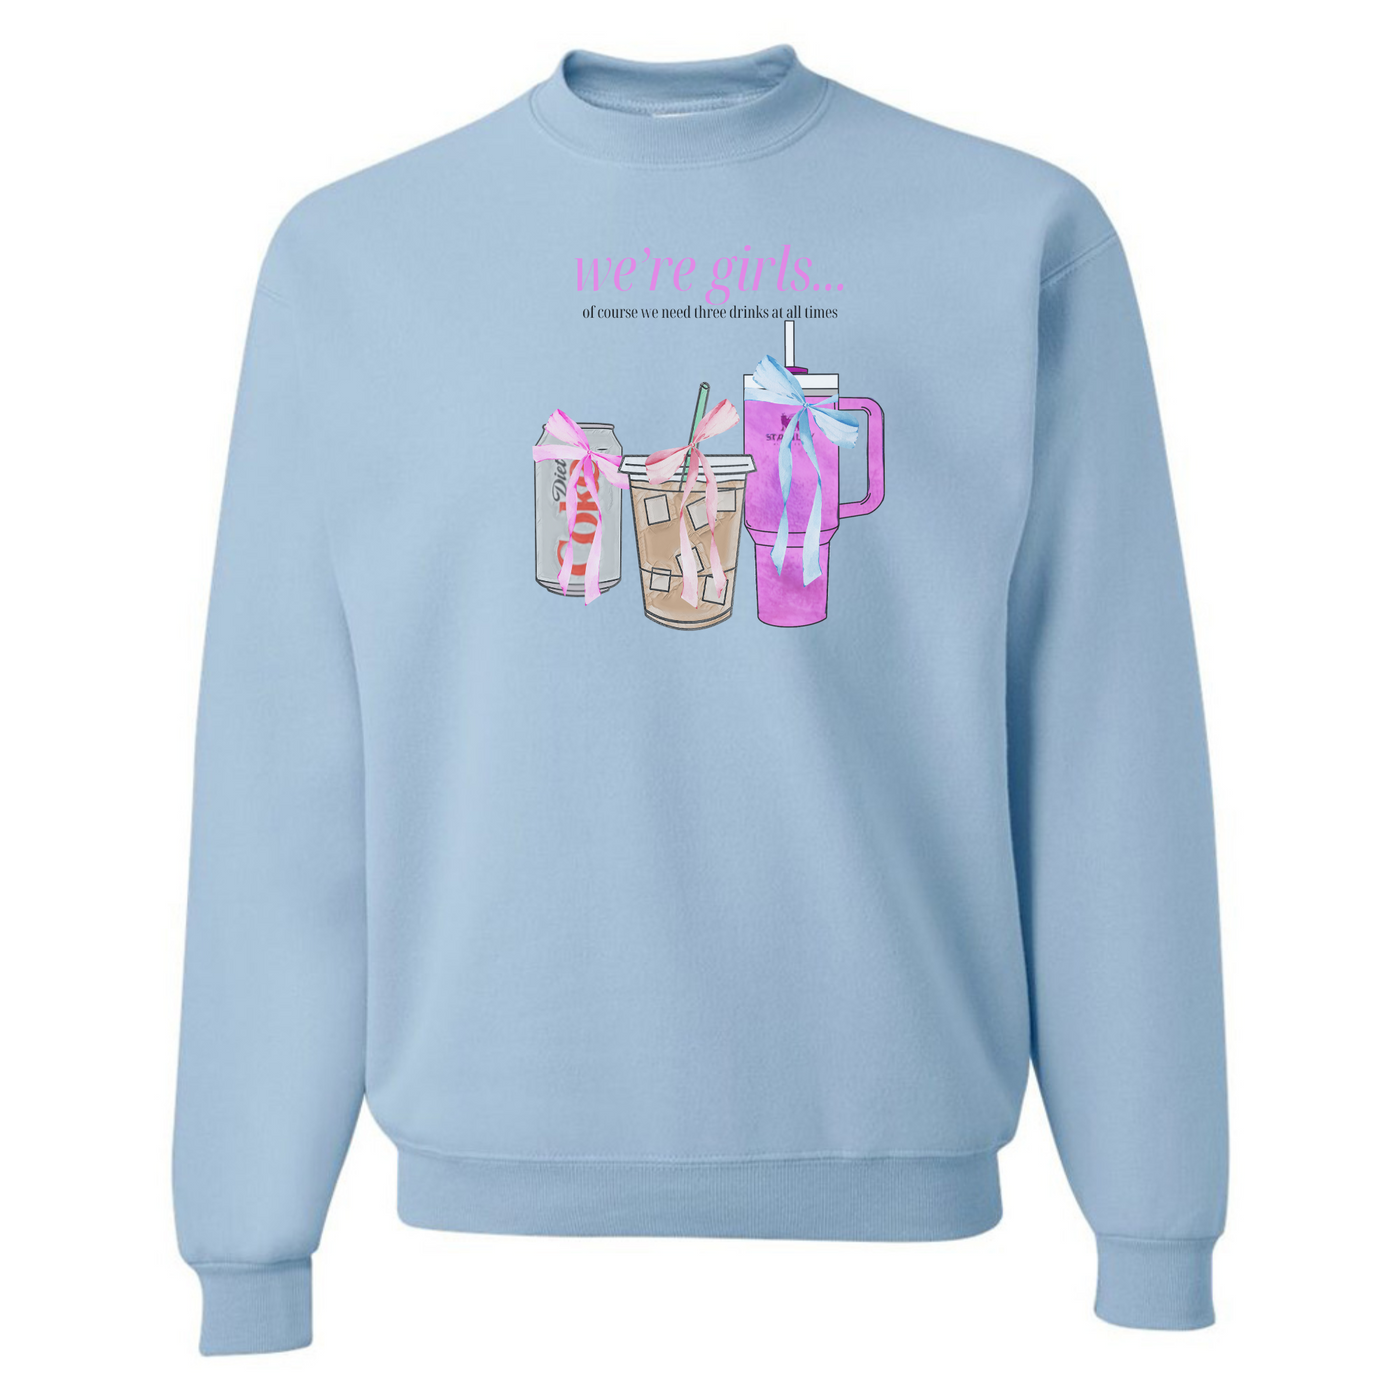 'We're Girls' Bow Drinks Crewneck Sweatshirt